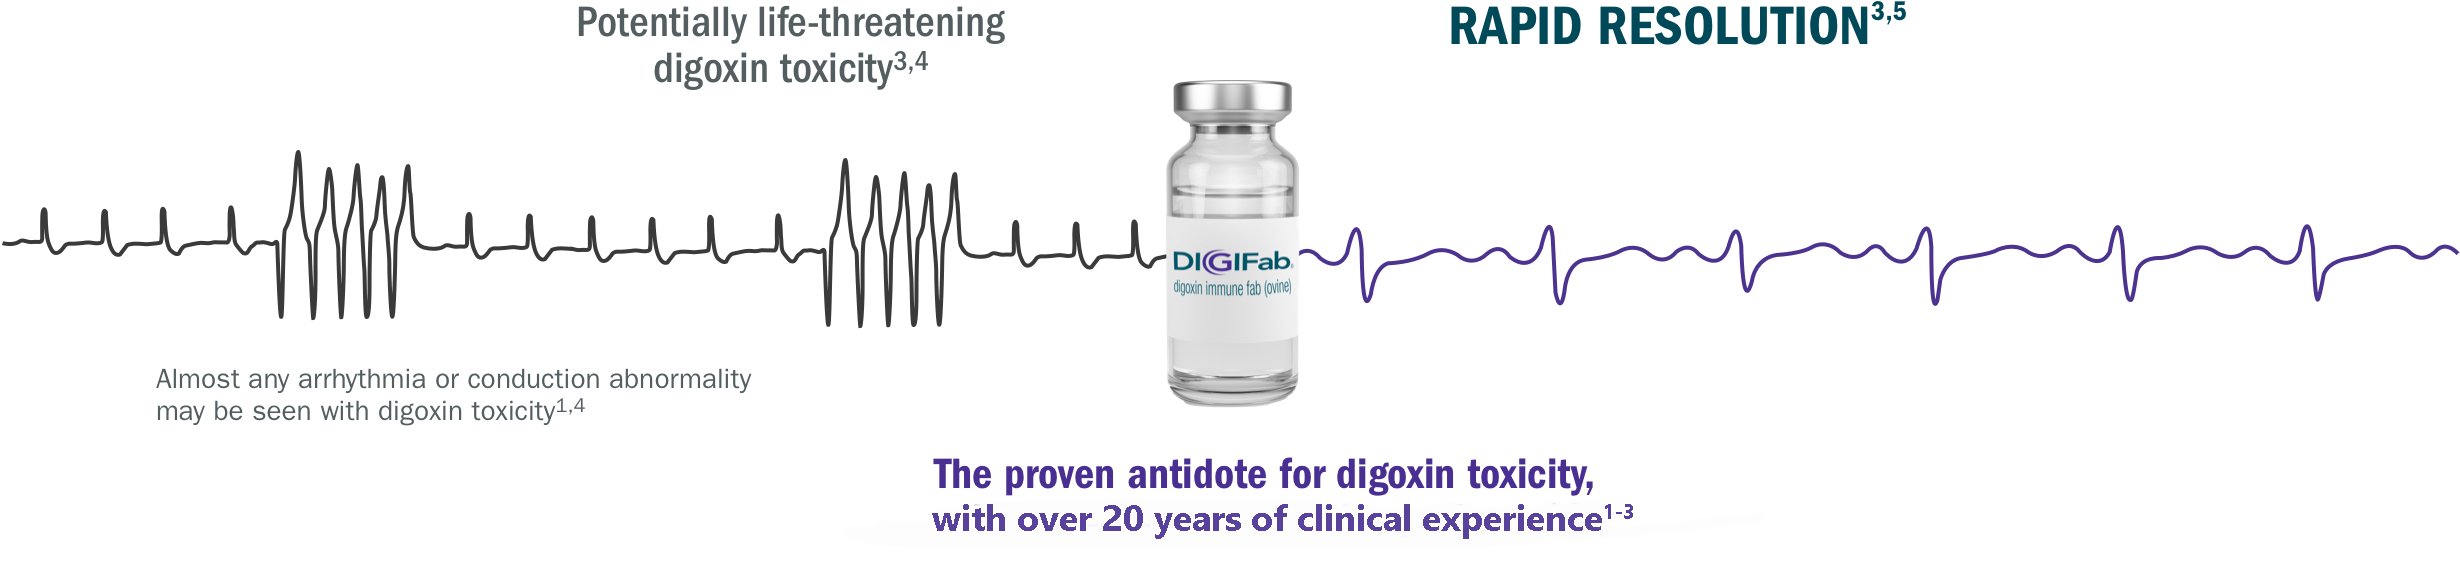 digoxin toxicity antidote digifab rapid resolution image